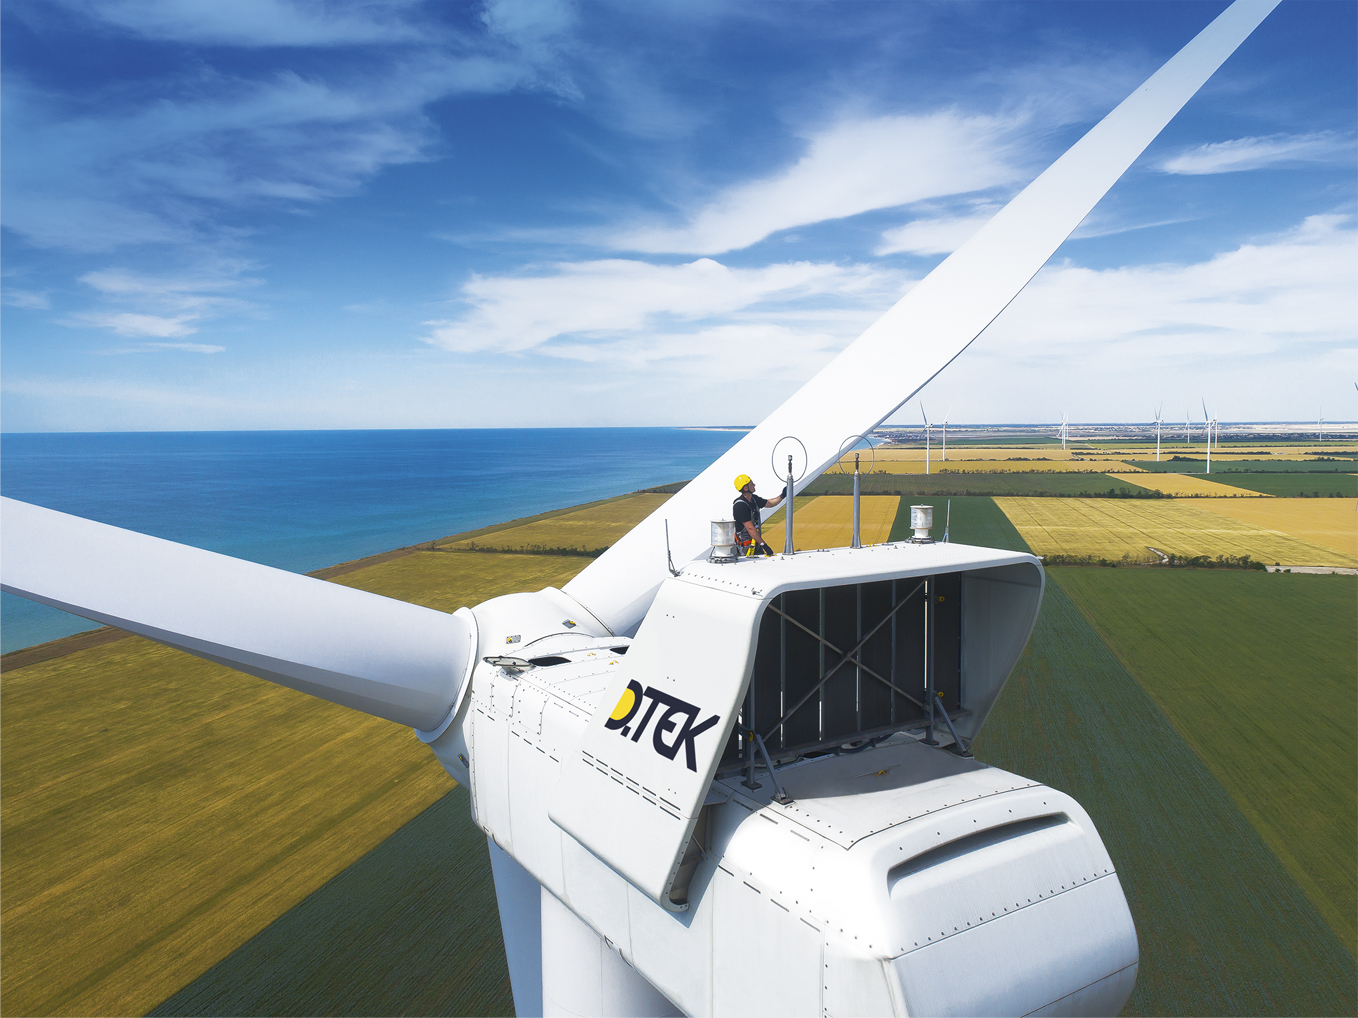 Wind farm, DTEK Renewables, Ukraine